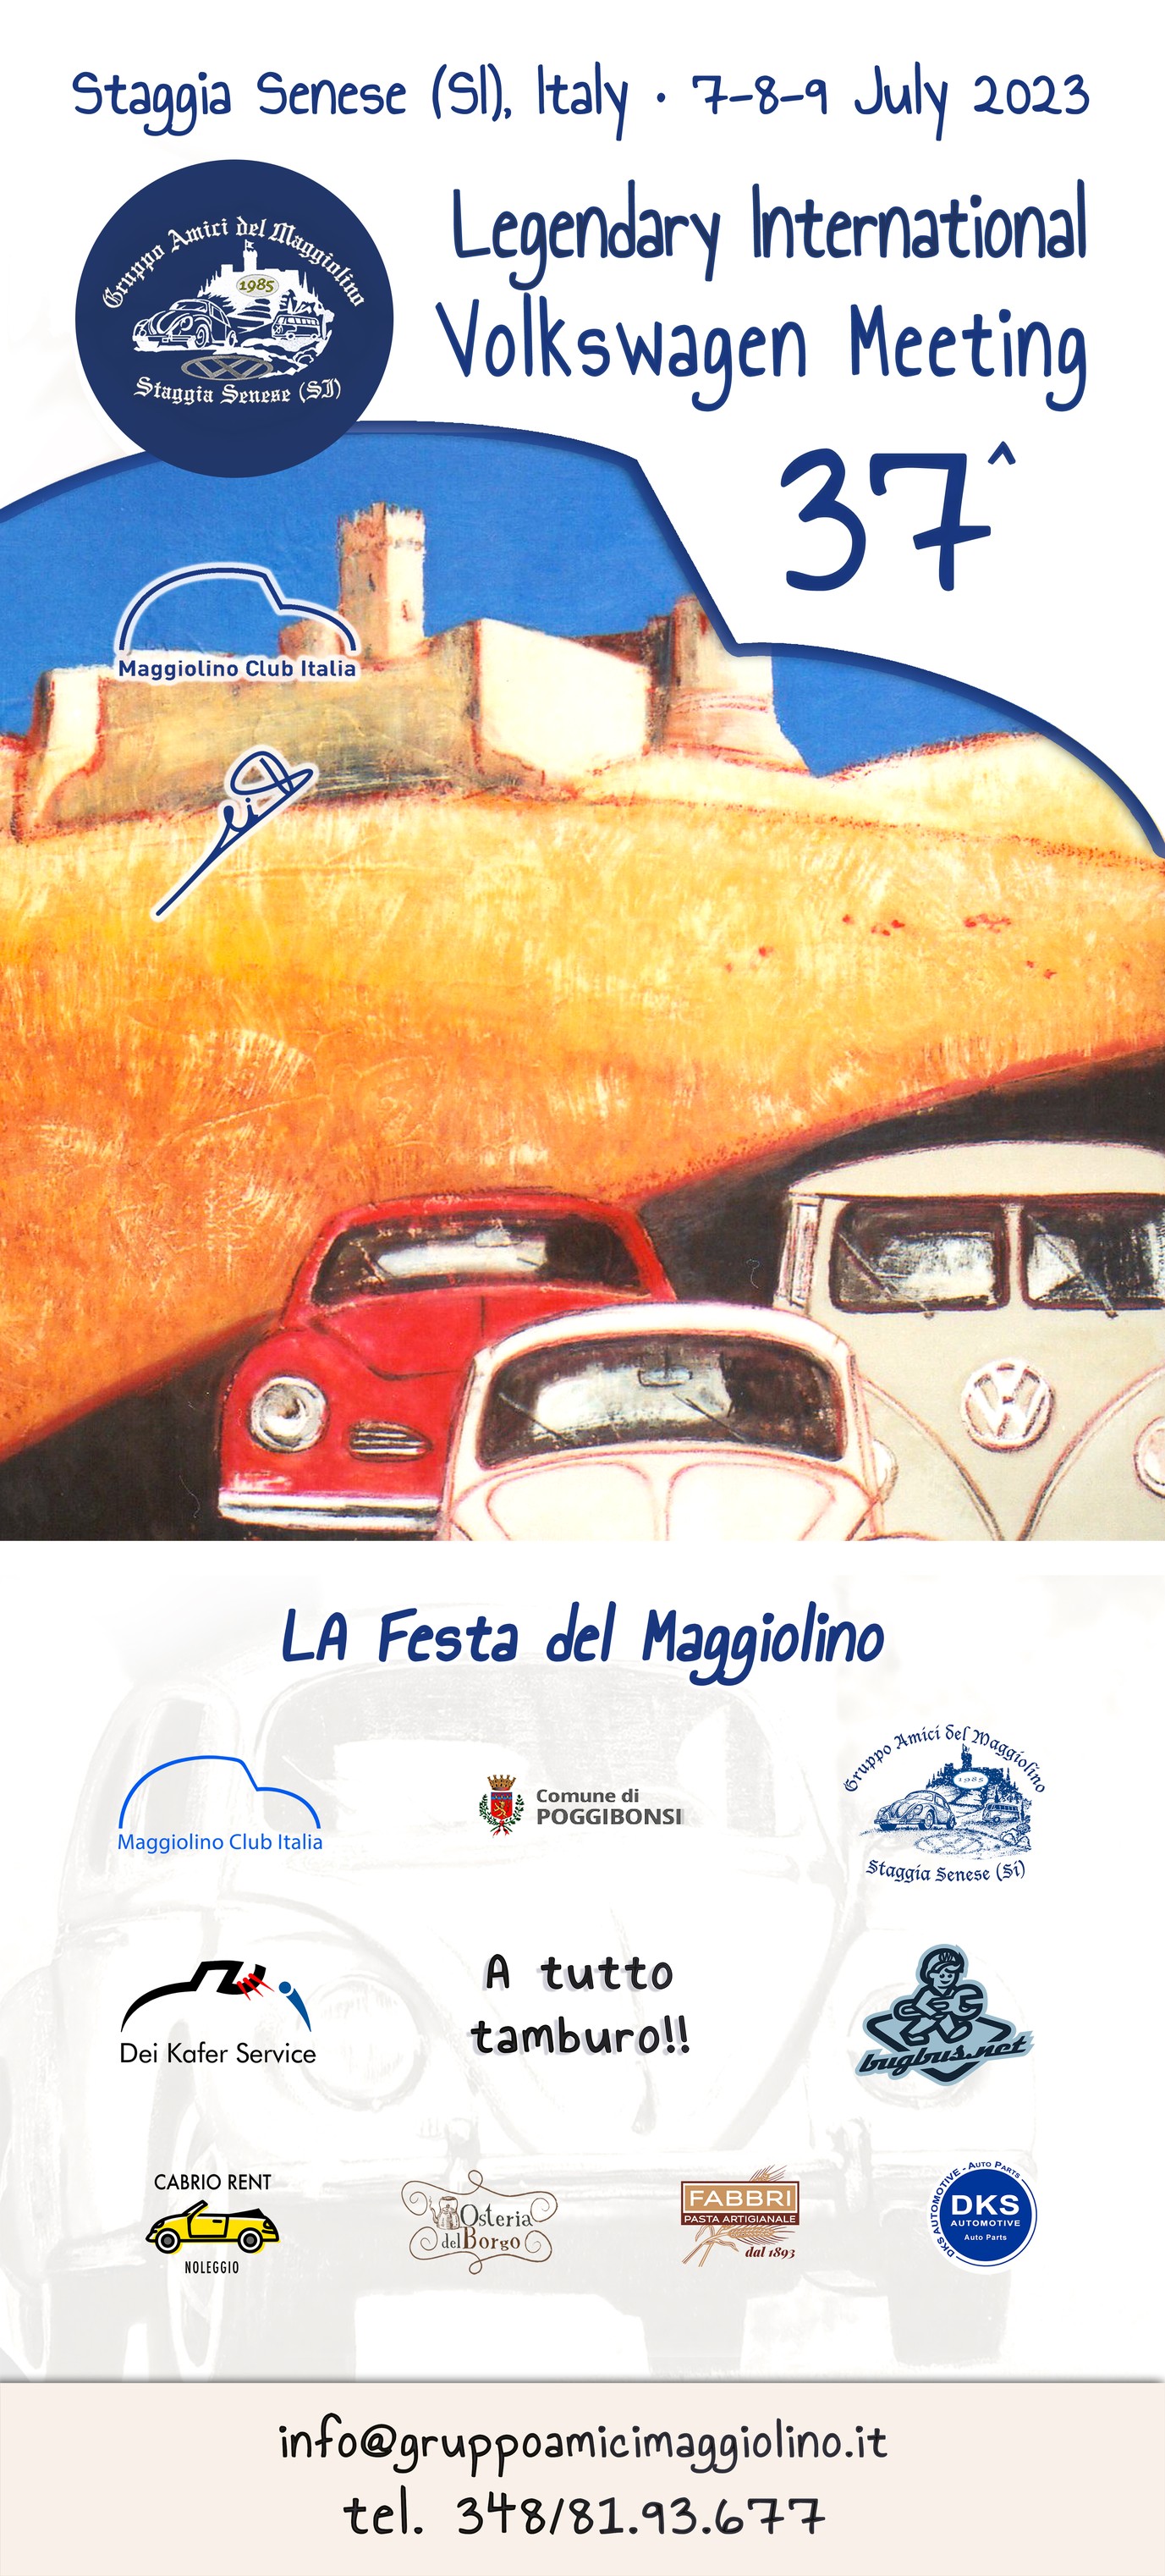 37º Legendary International VW Meeting raduno Staggia Senese Siena maggiolino maggiolini